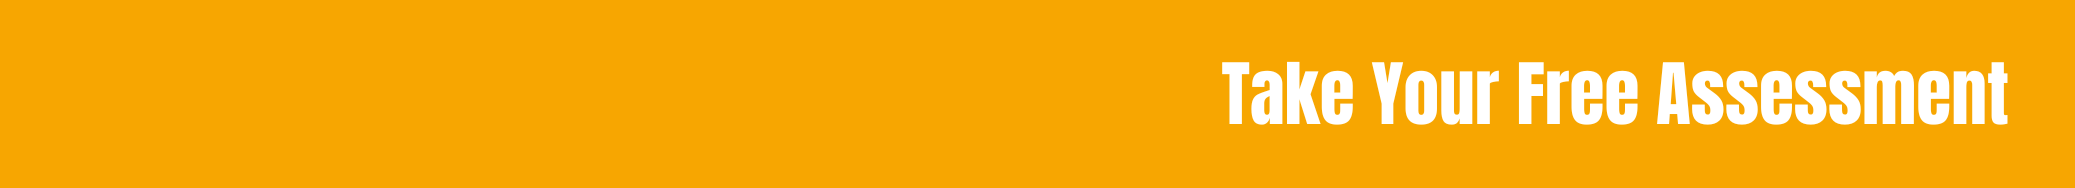 ScalingUp Banner - Take Your Free Assessment (Orange)